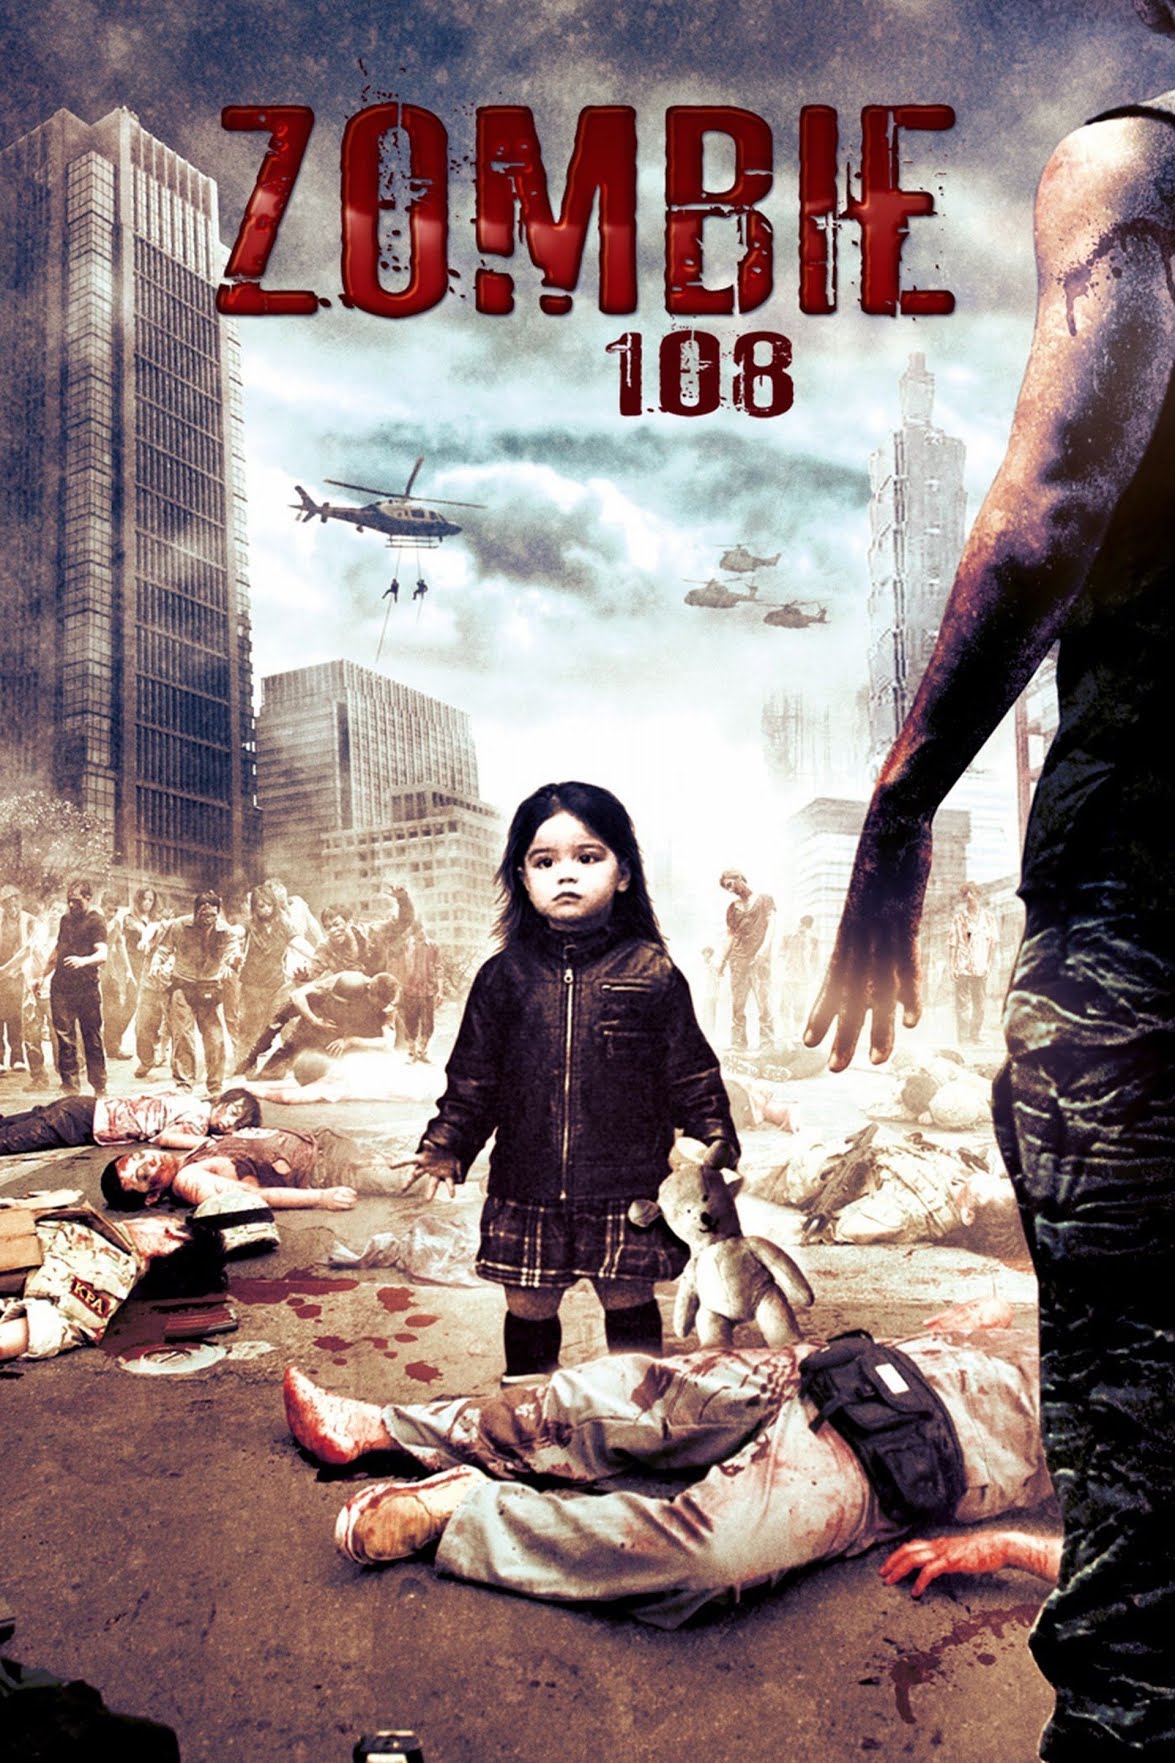 Zombie 108 [Sub-ITA] (2012)